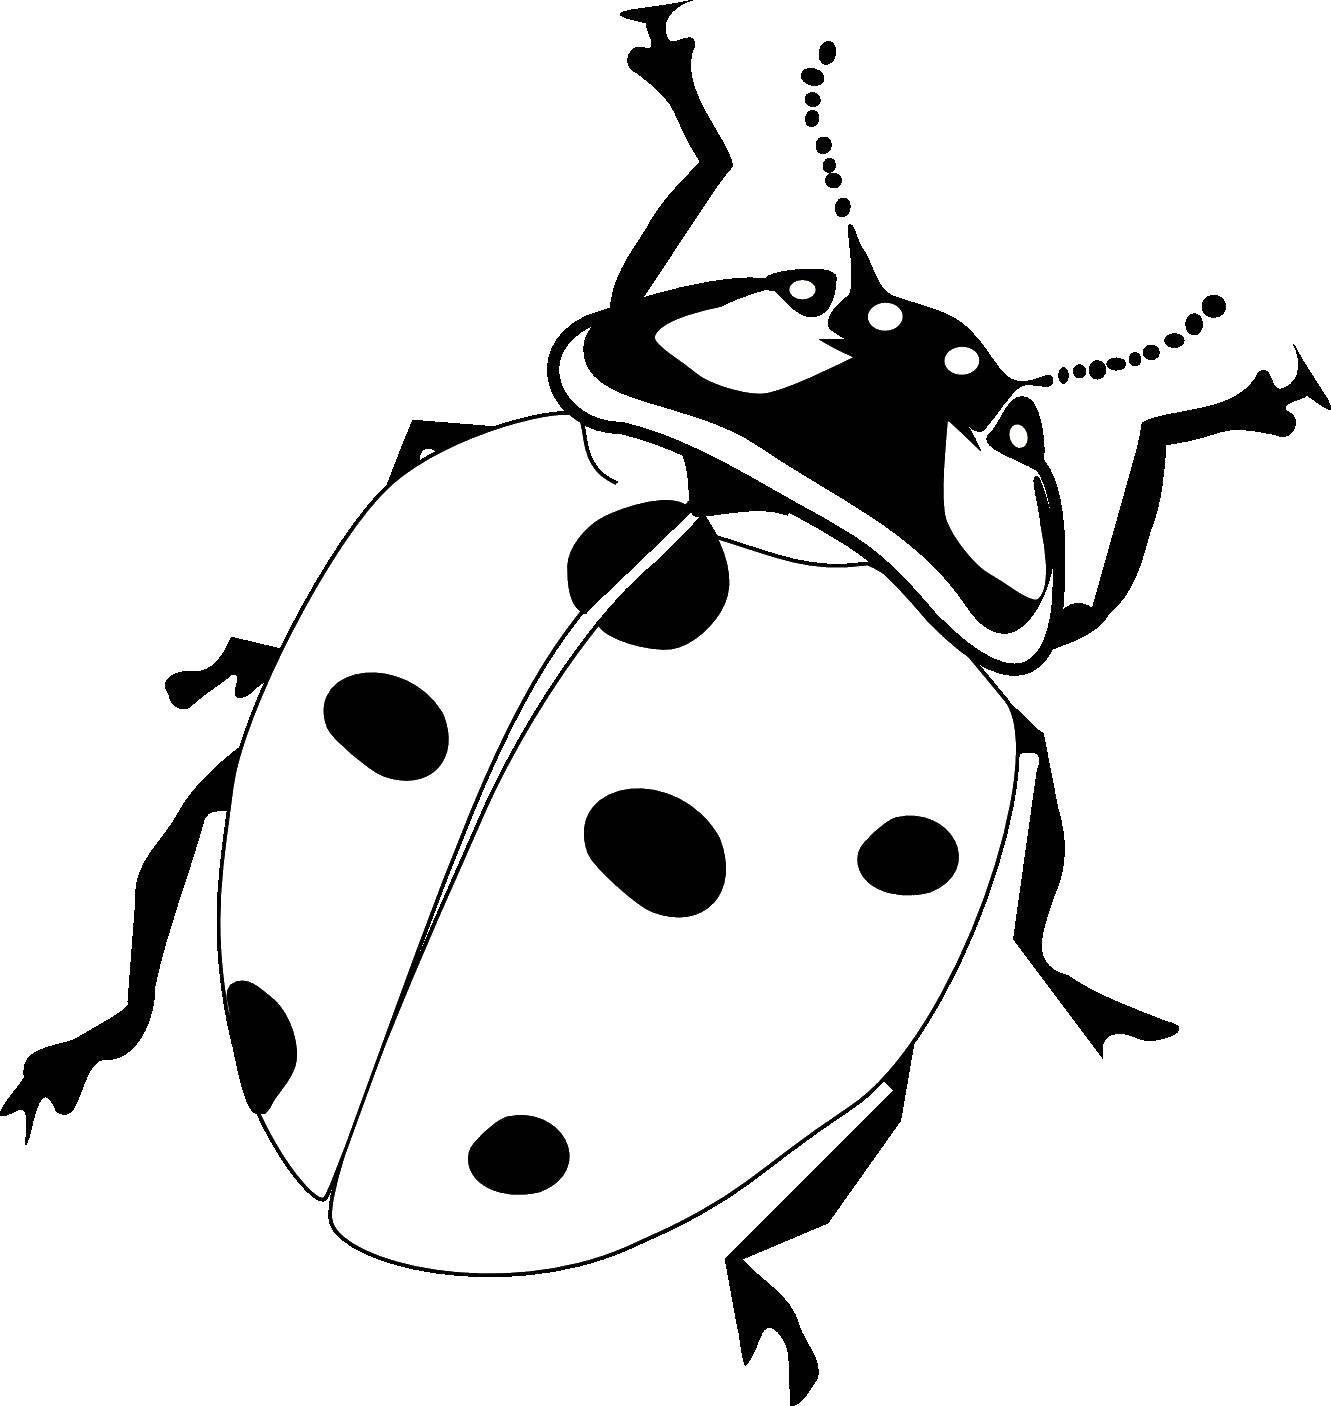 Coloring Ladybug. Category Insects. Tags:  Ladybug, beetle.